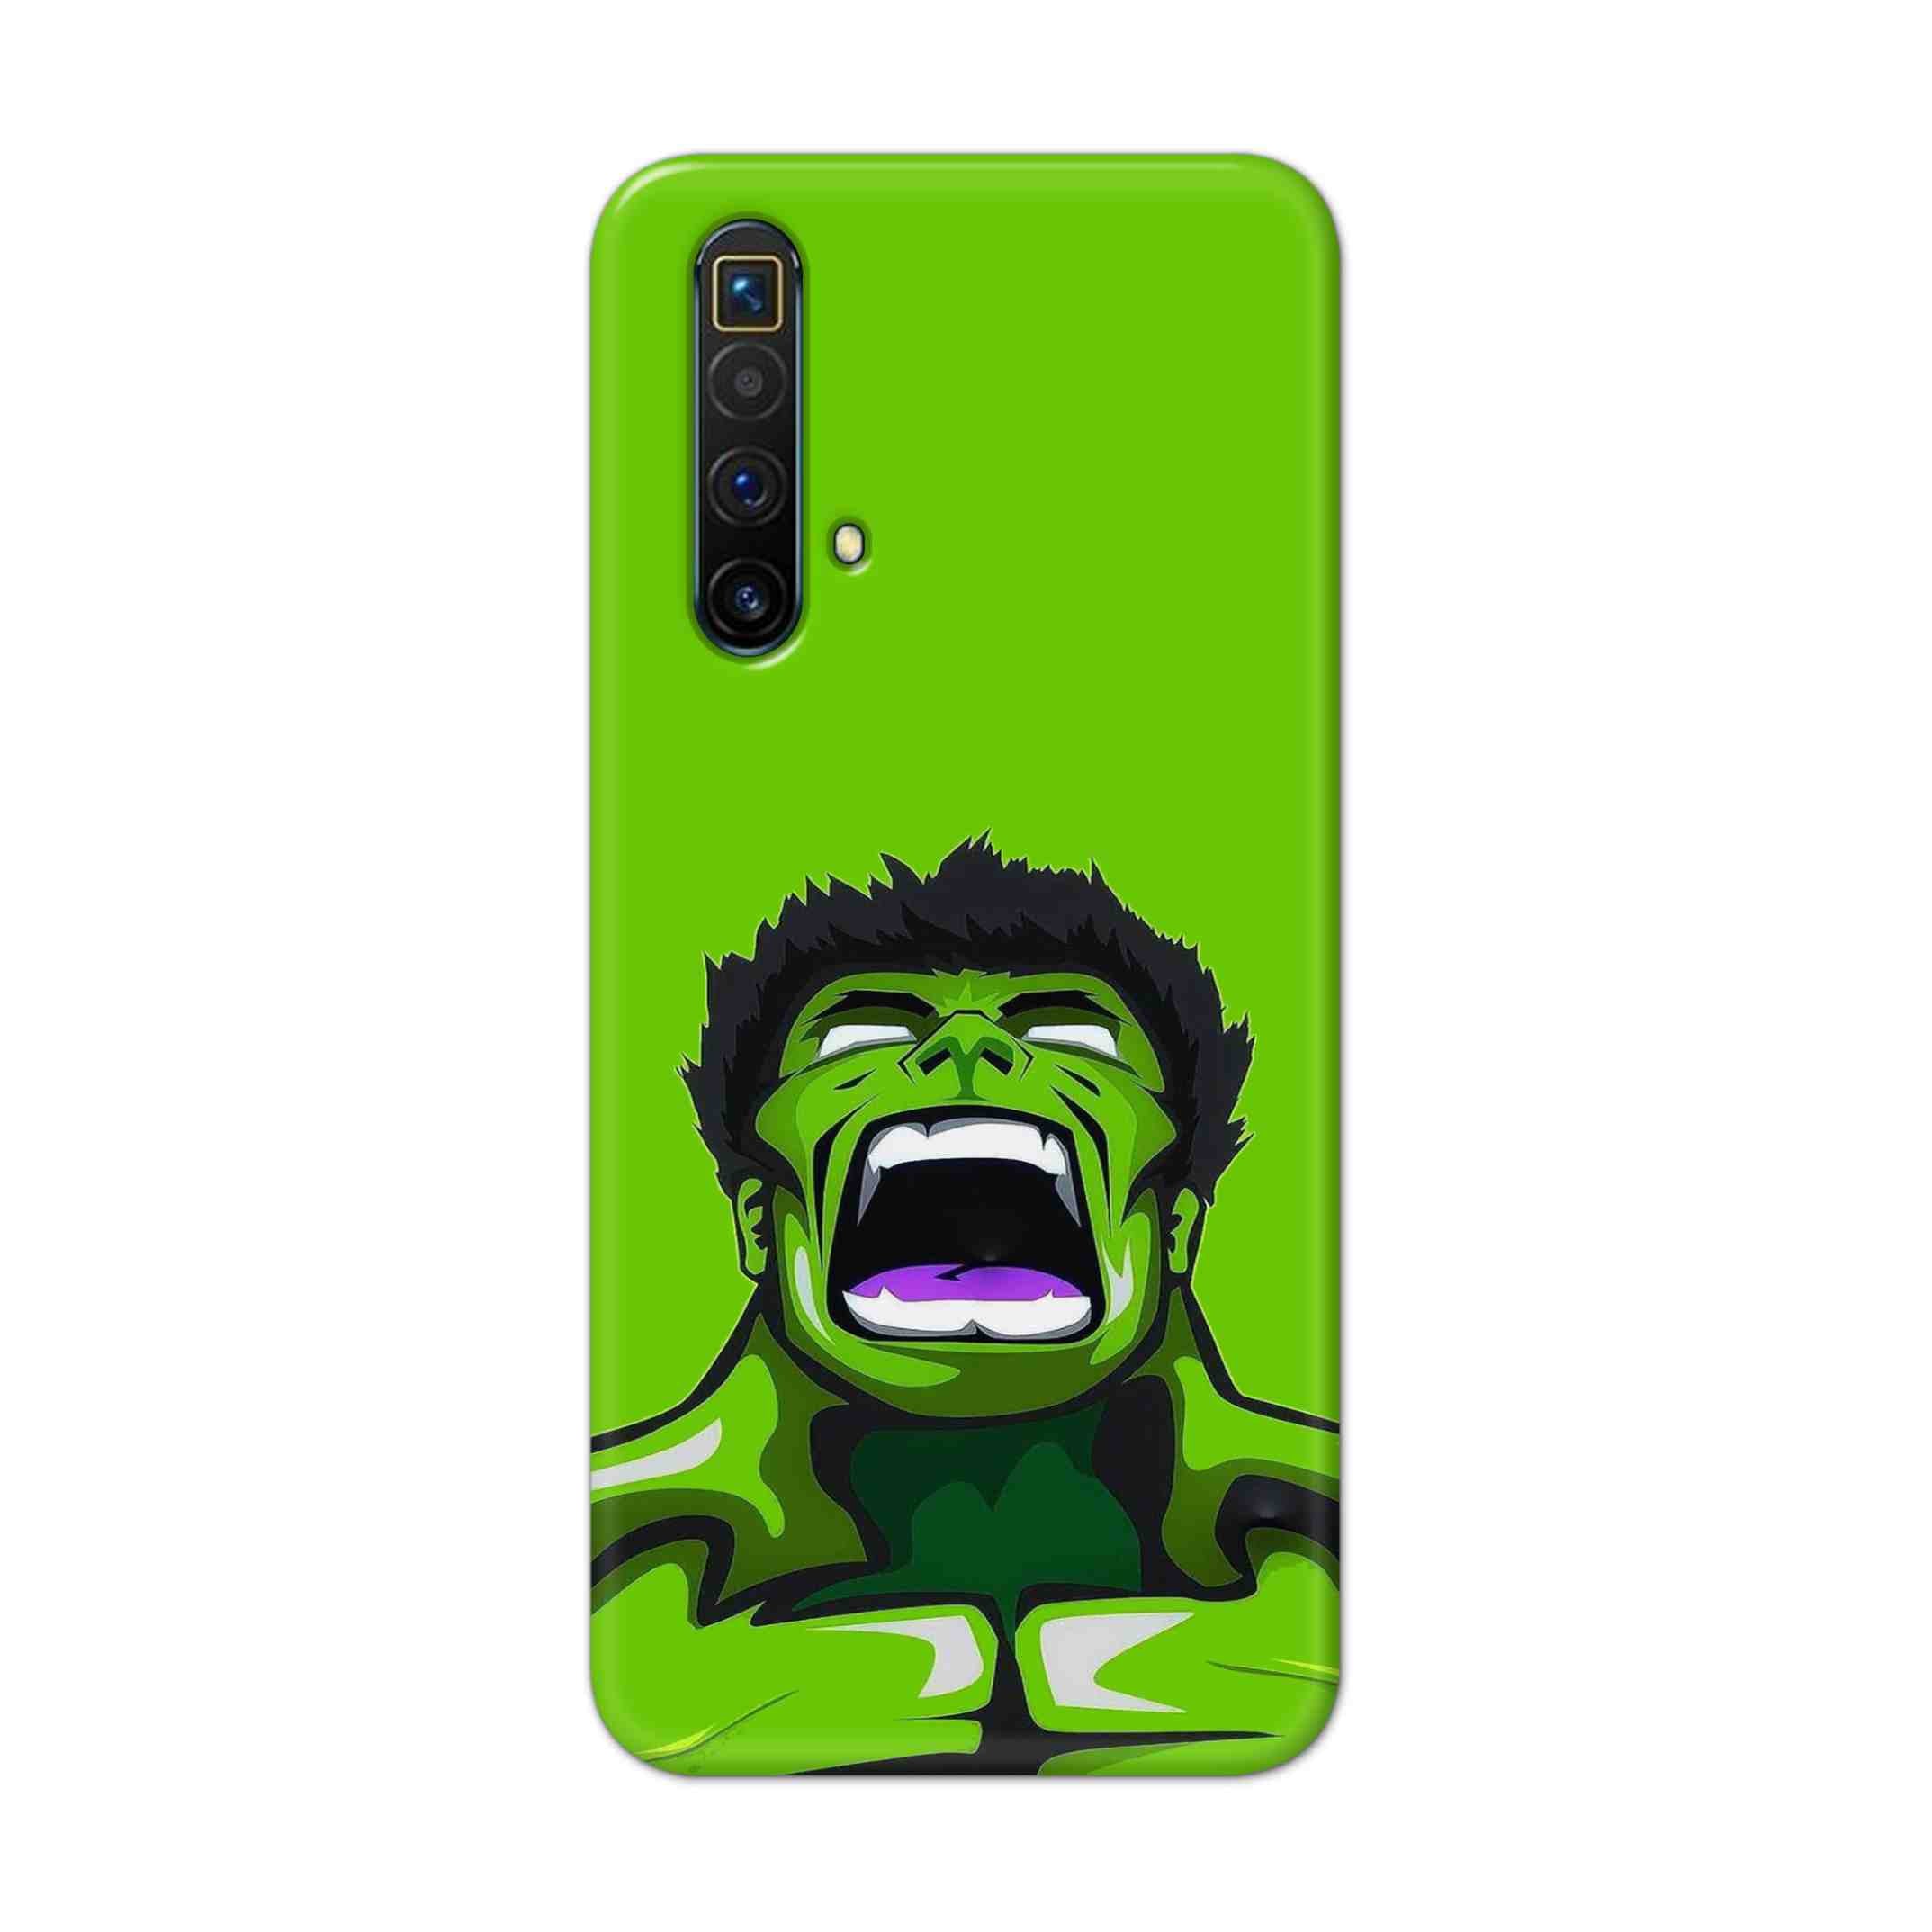 Buy Green Hulk Hard Back Mobile Phone Case Cover For Oppo Realme X3 Online